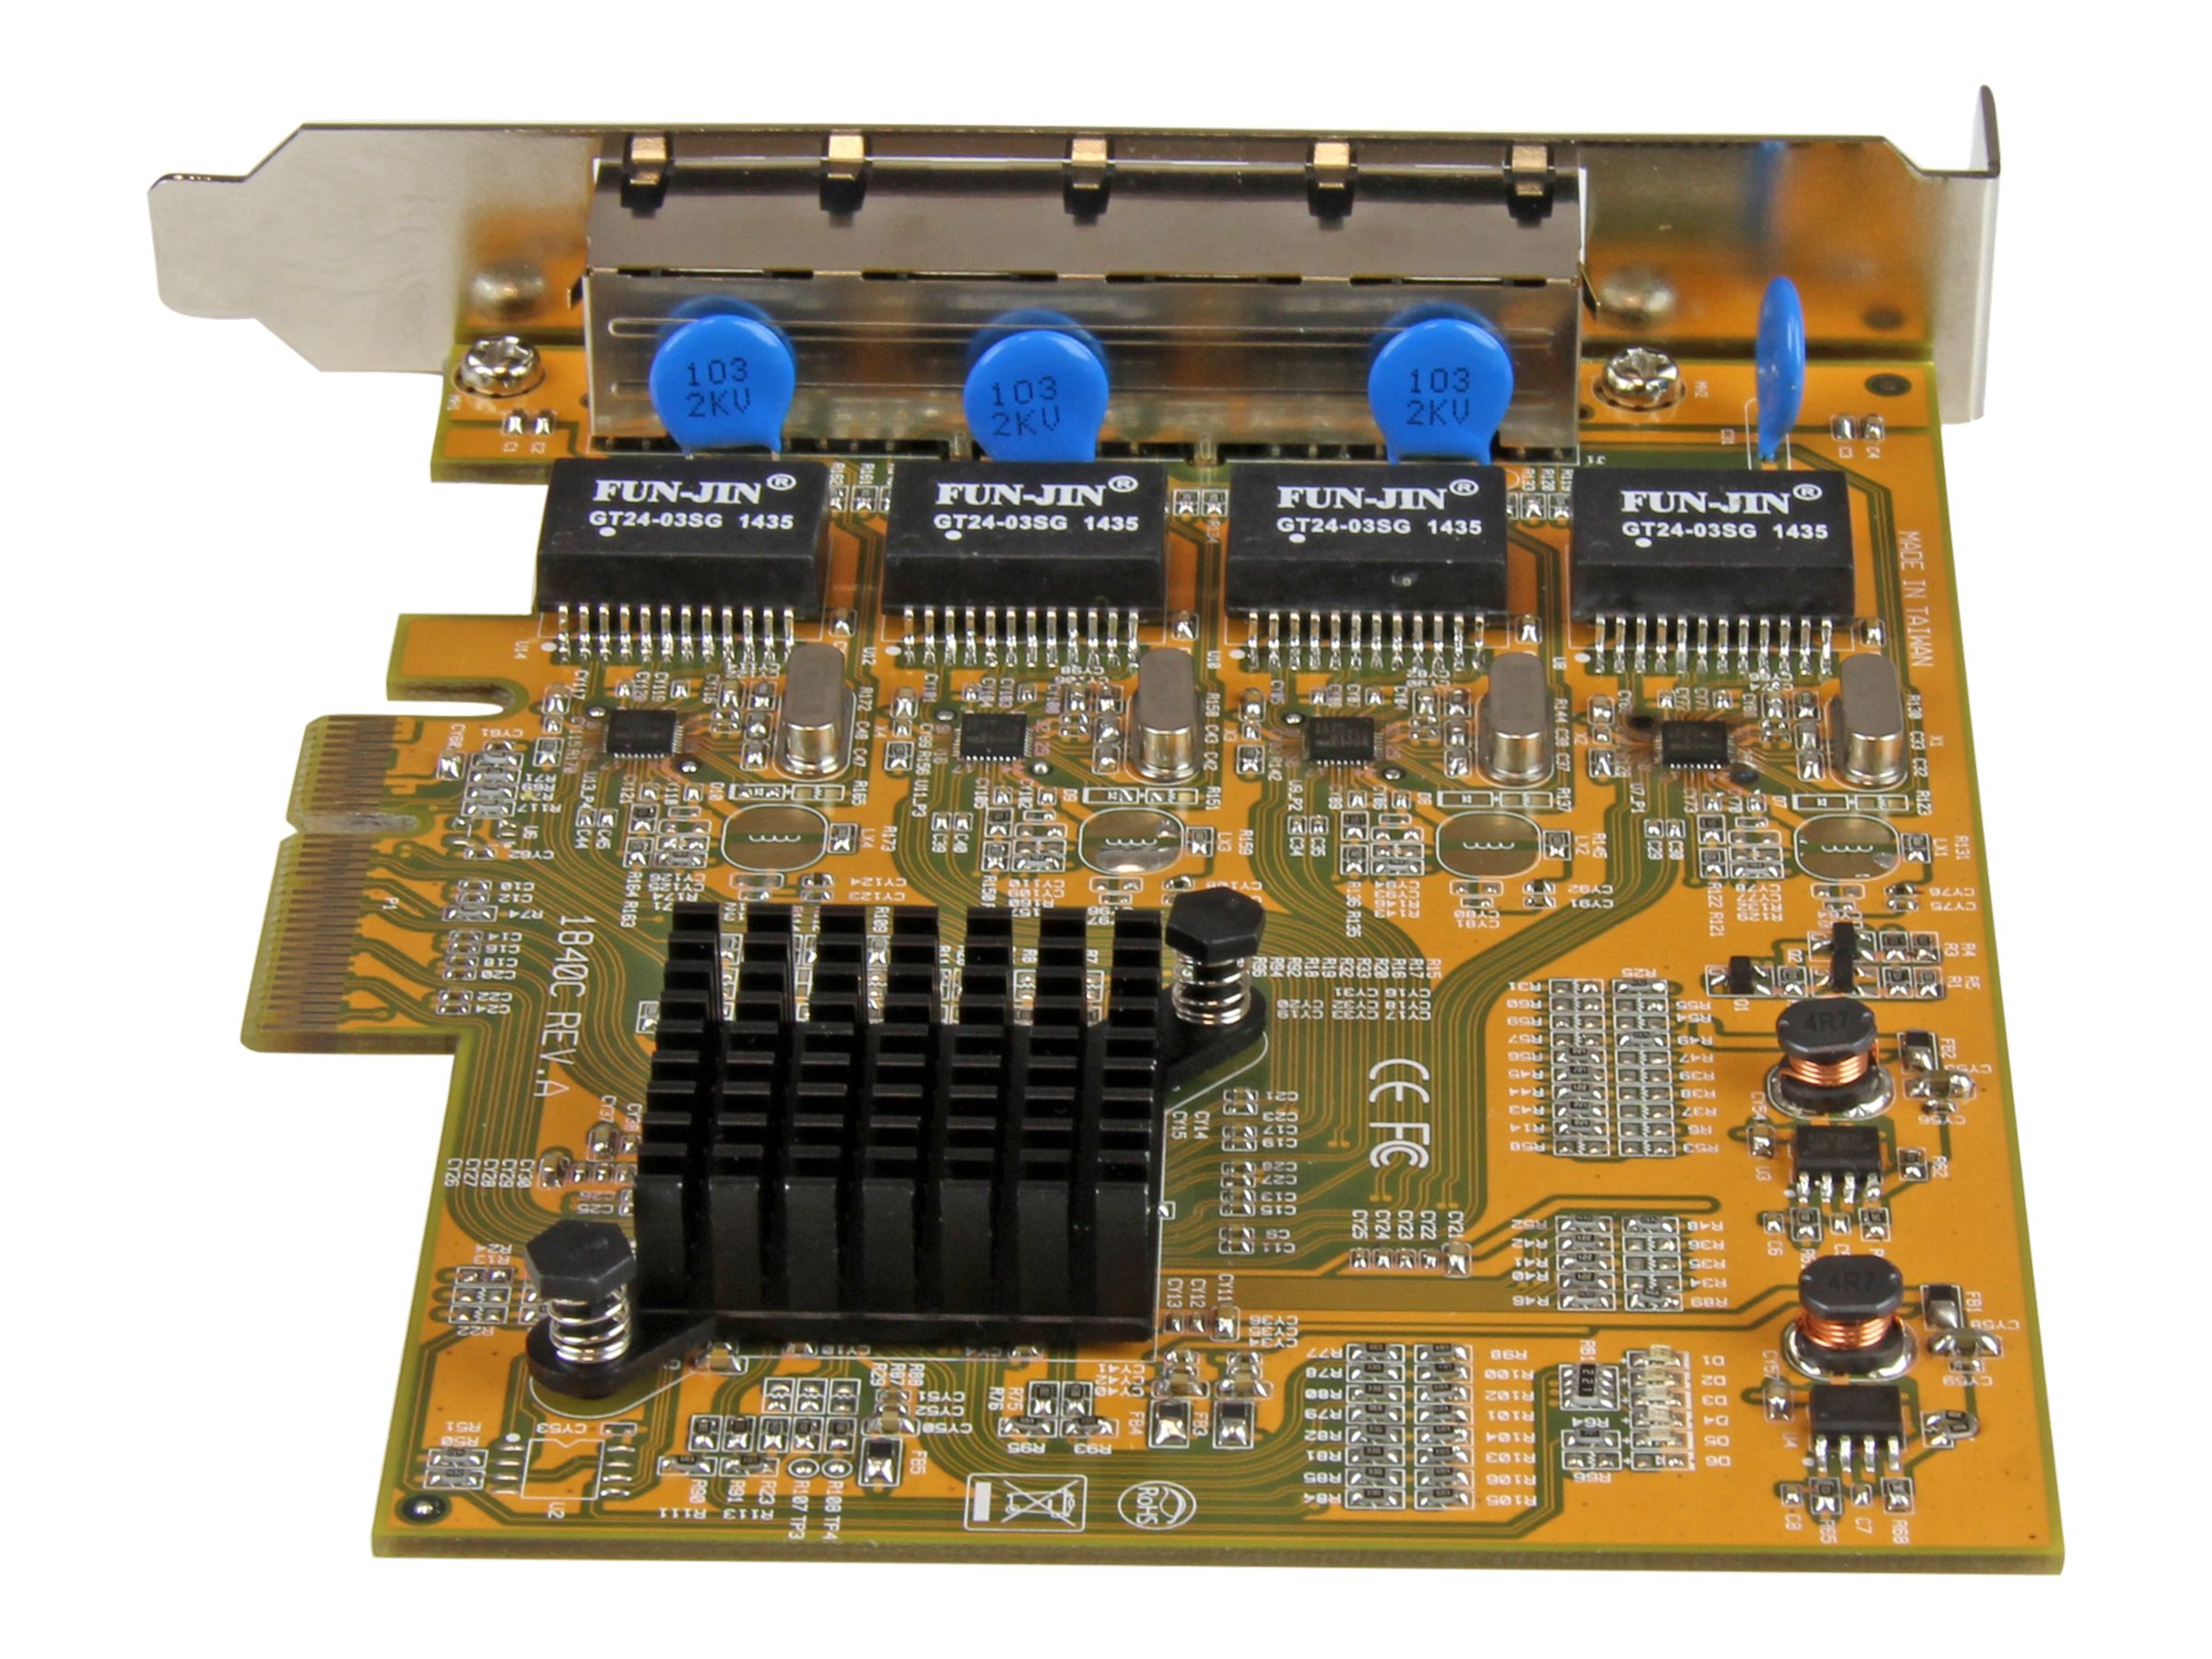 StarTech.com 4 Port PCIe Gigabit Netzwerkkarte